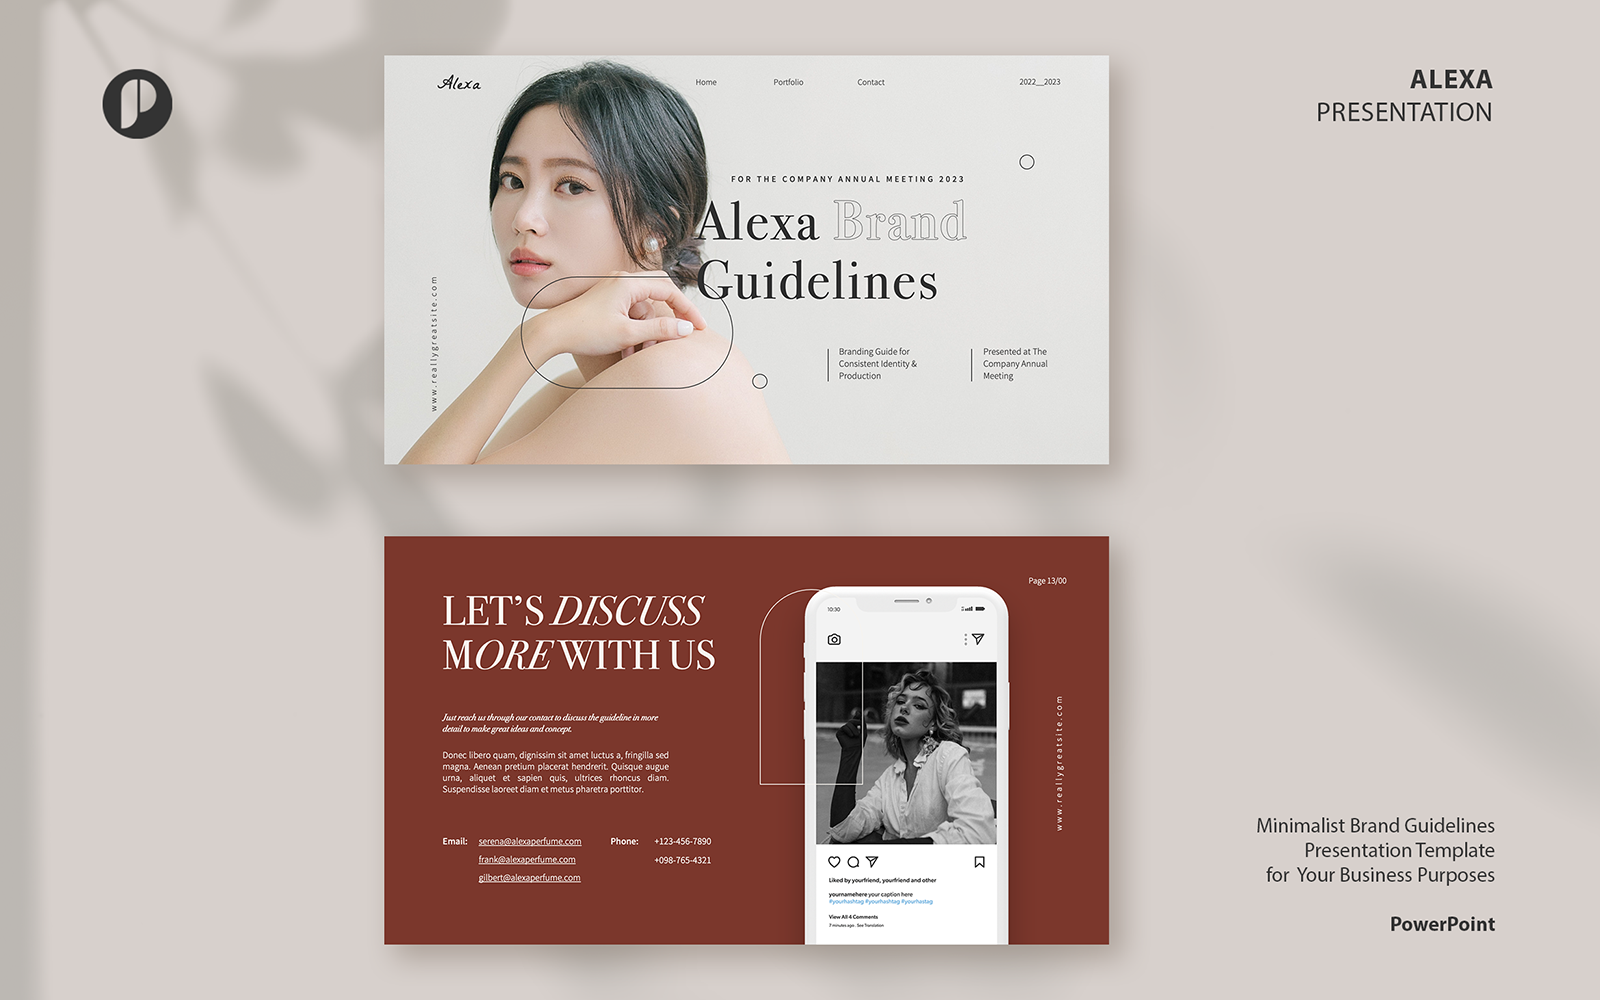 Alexa – clean minimalist brand guidelines presentation